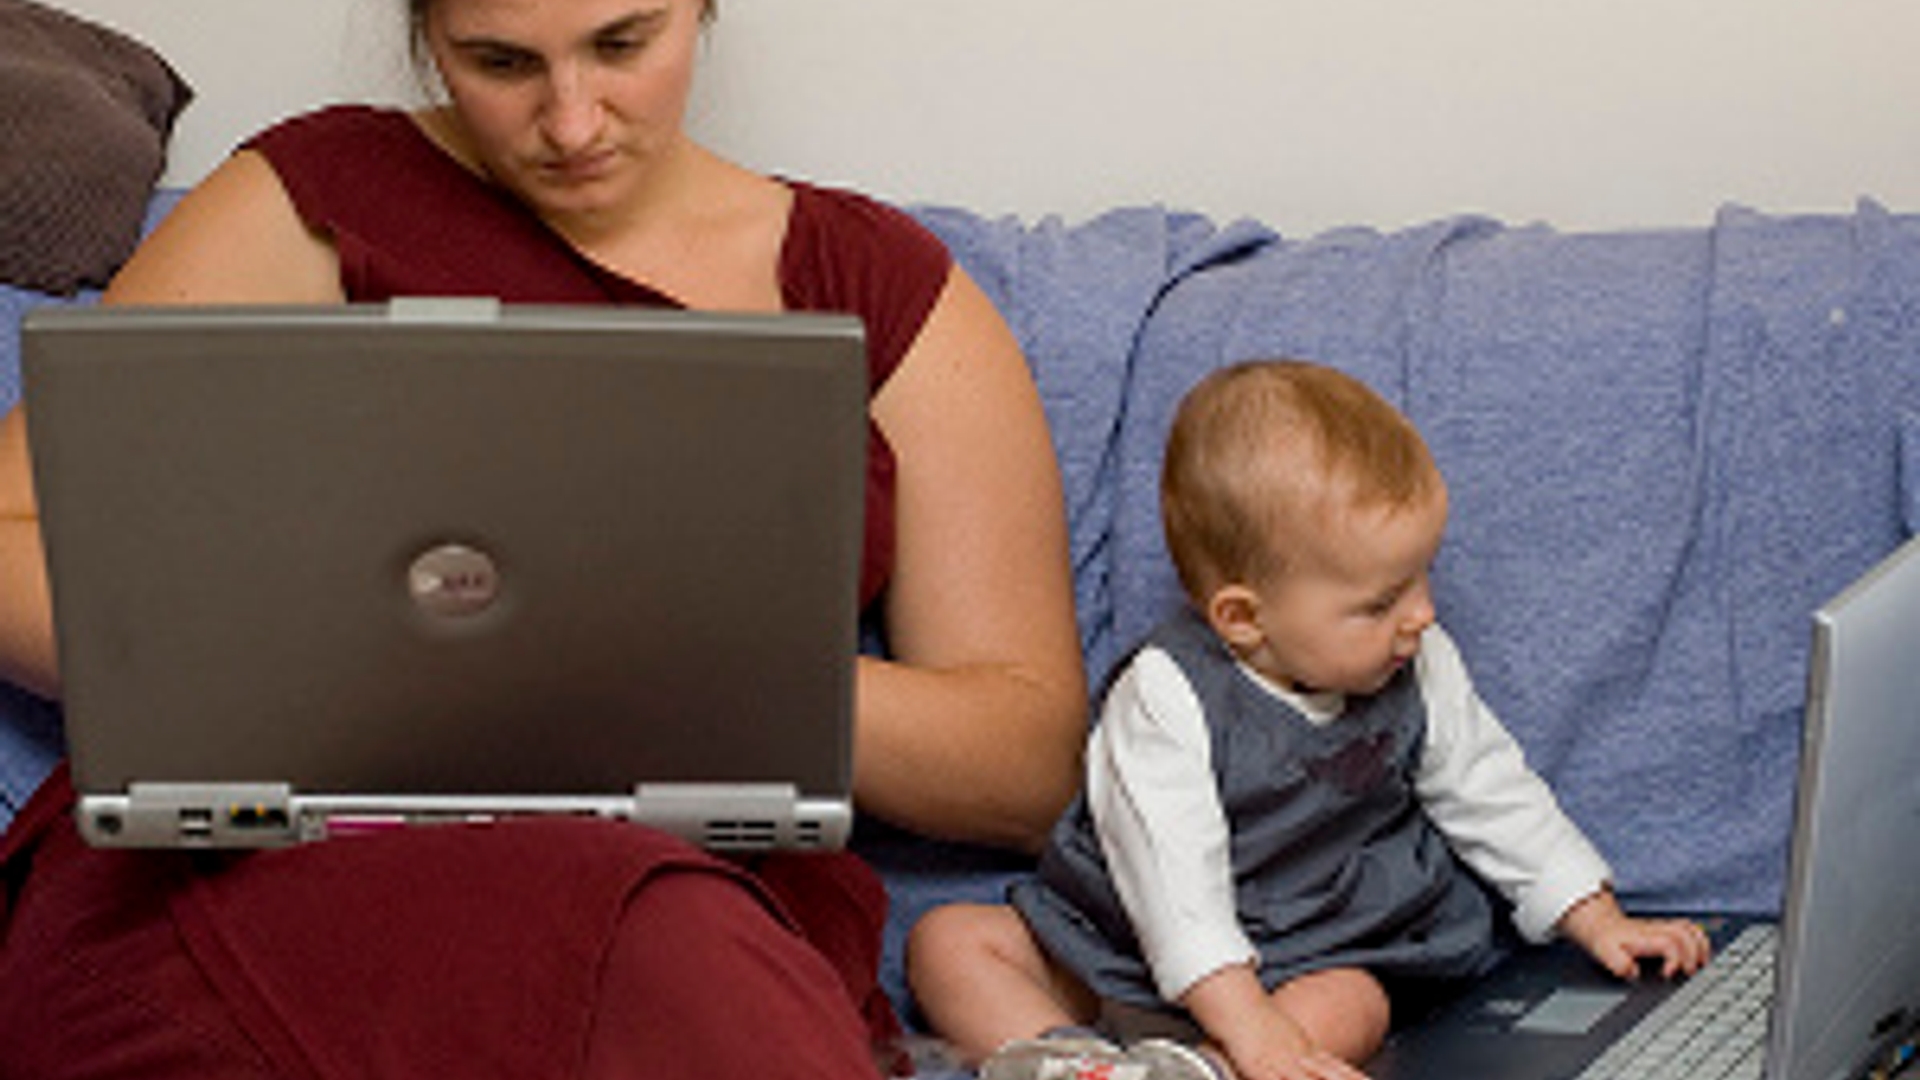 mother-child-laptop.jpg